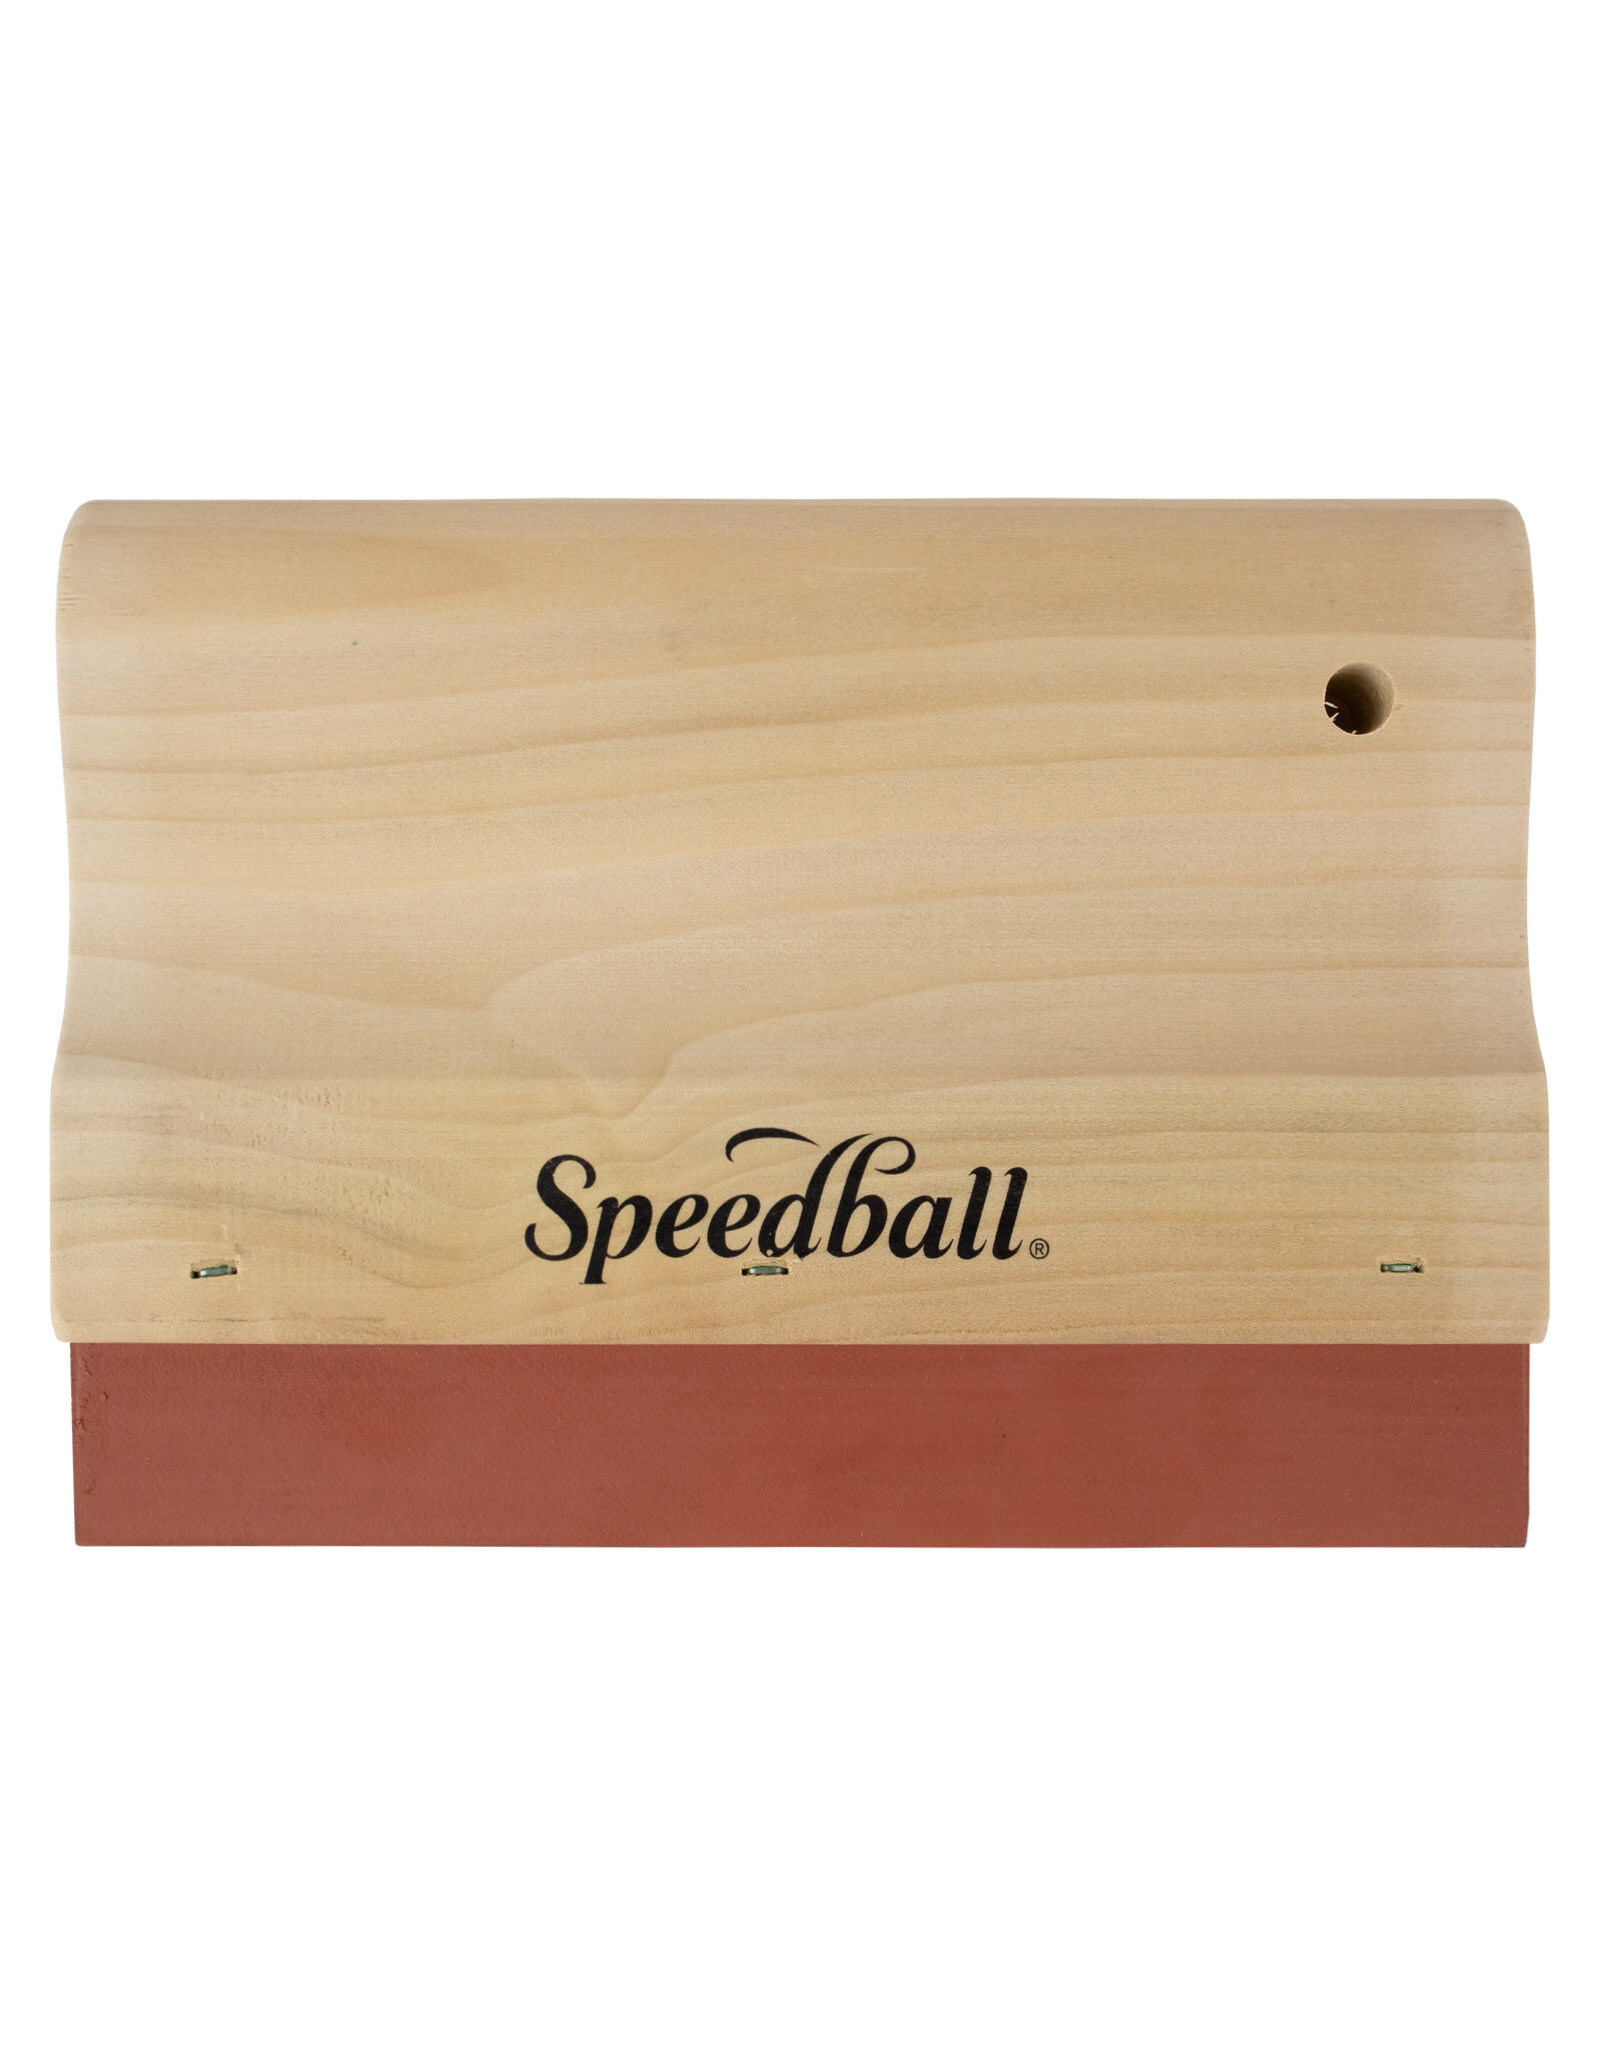 SPEEDBALL ART PRODUCTS Speedball 8" Graphic Squeegee, Neoprene, 70 Durometer